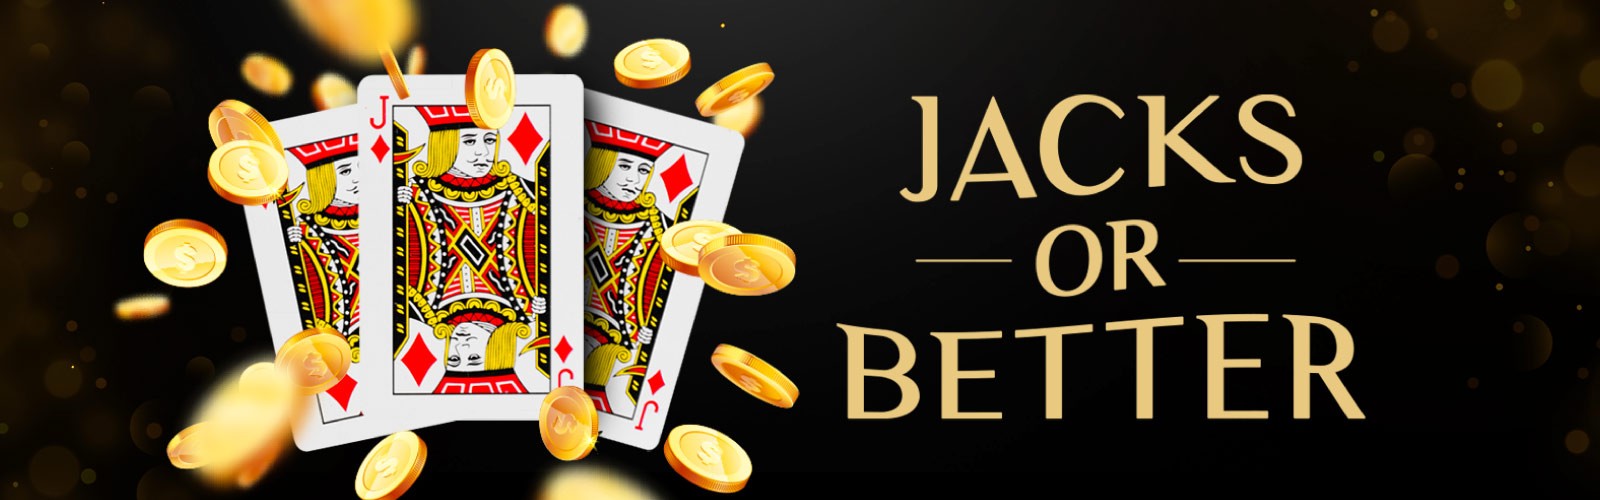 Jacks or Better Video pokers